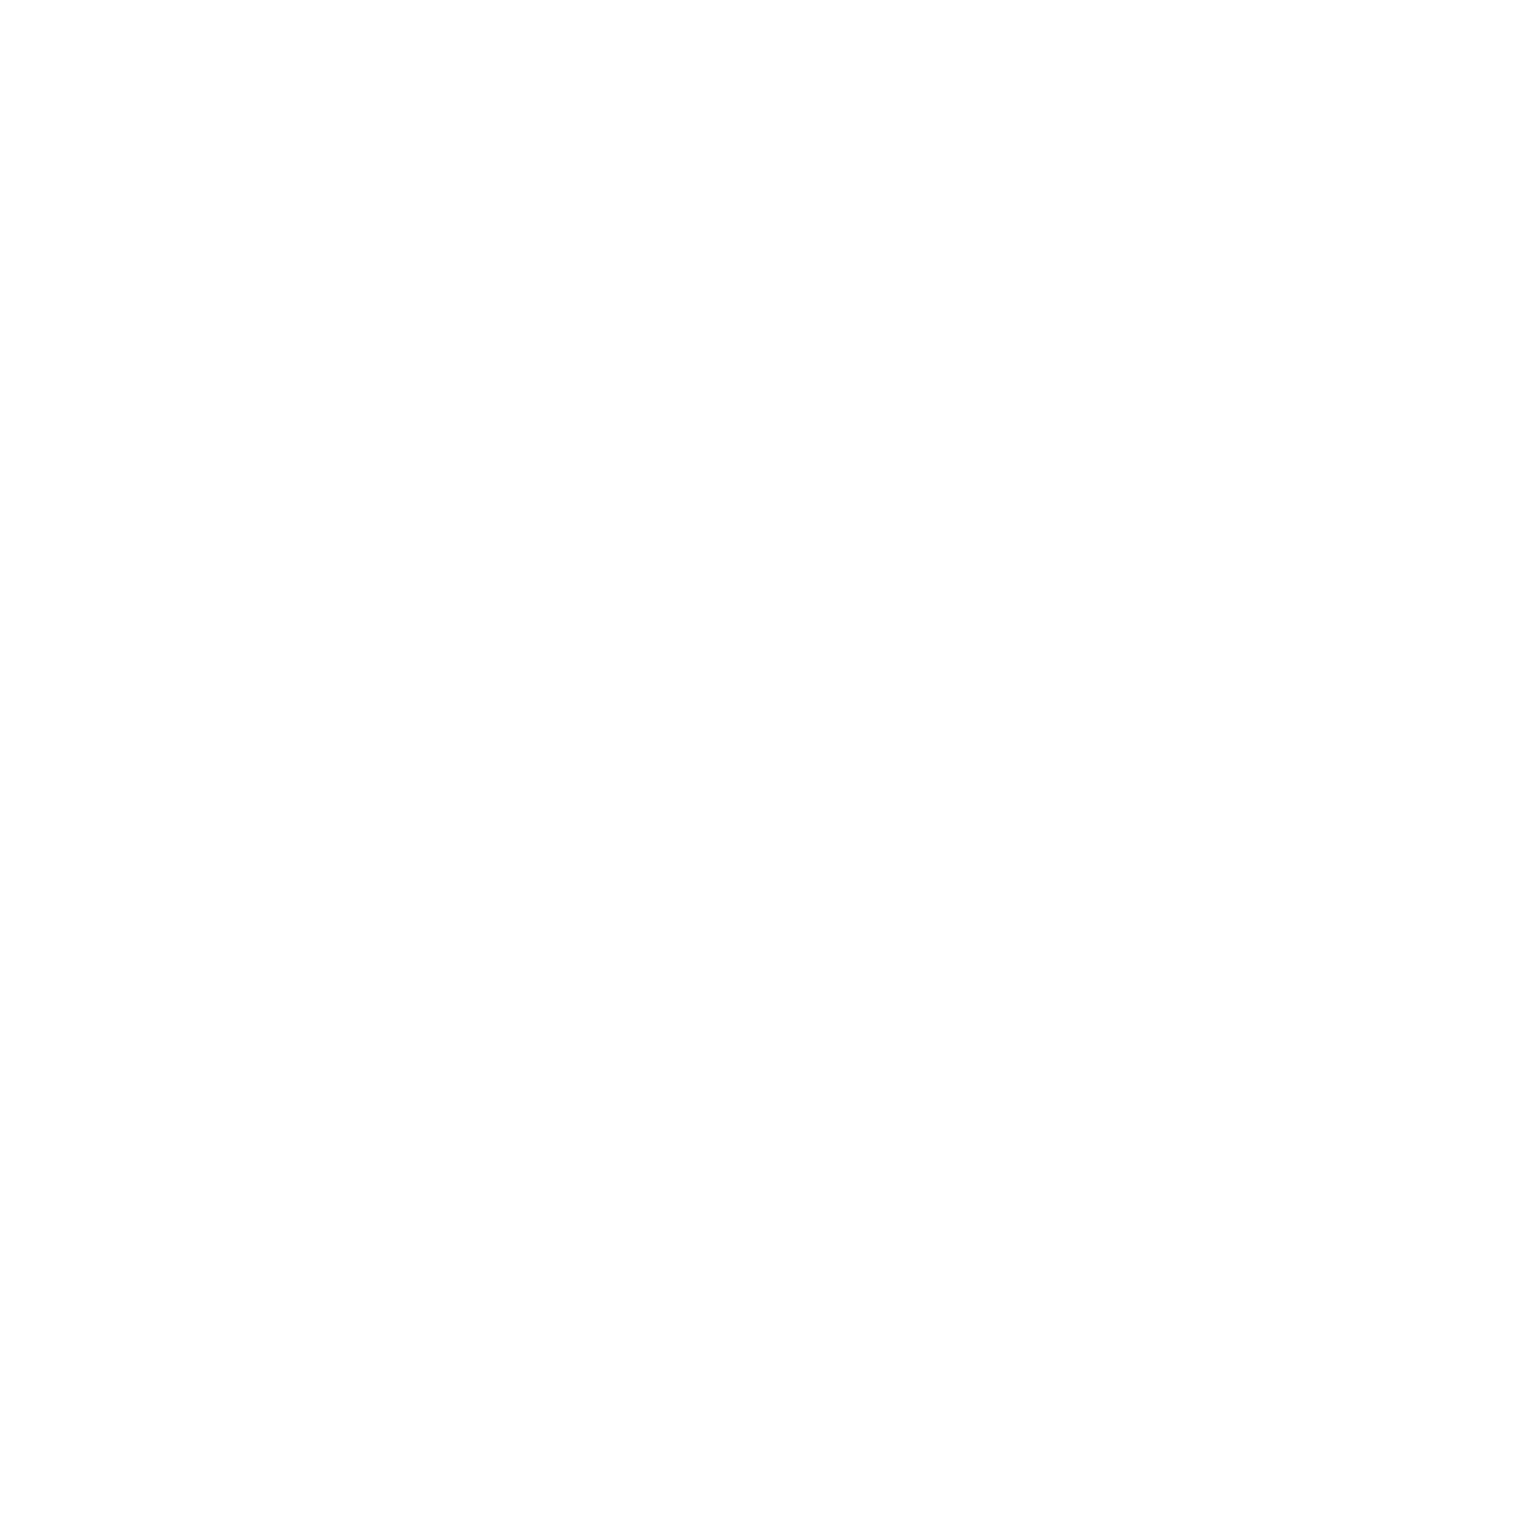 Gracie torrance round logo 1600